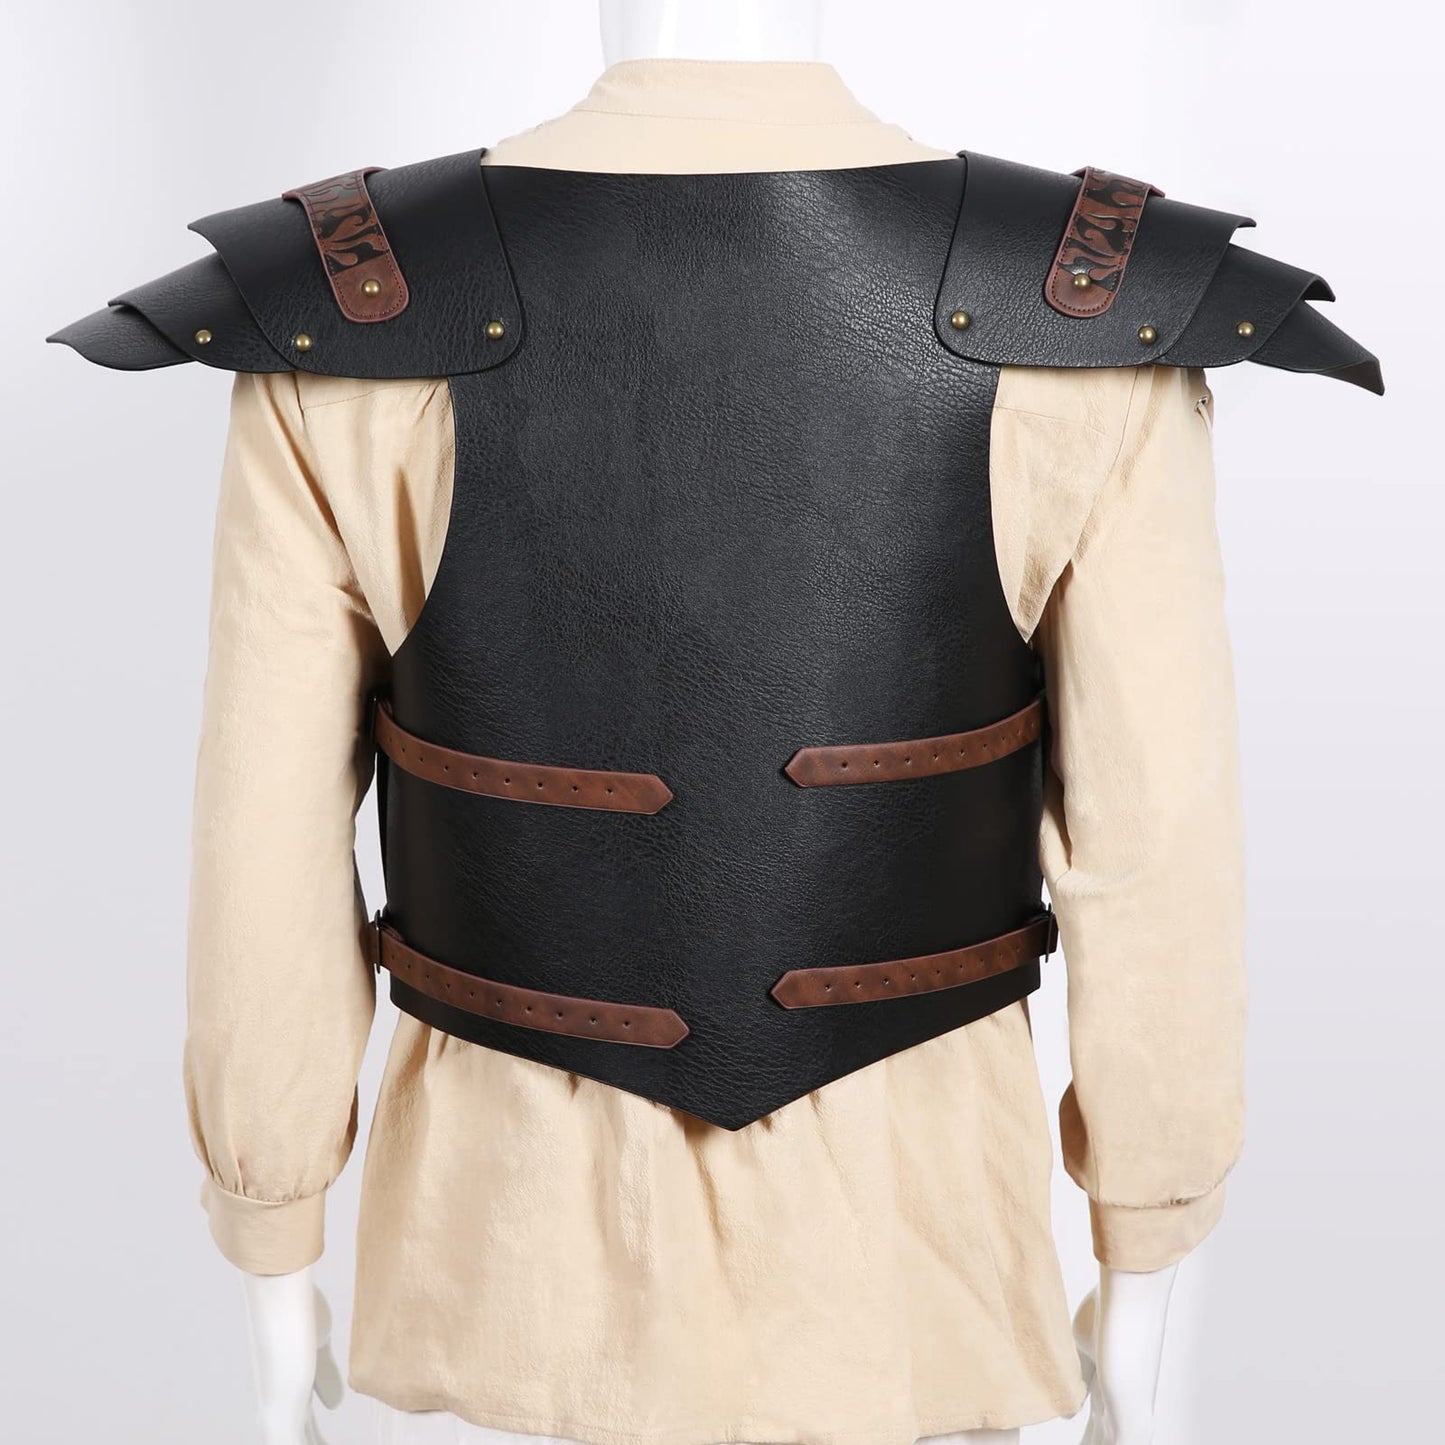 HZMAN Viking Warrior Chest Armor Medieval PU Leather Vest